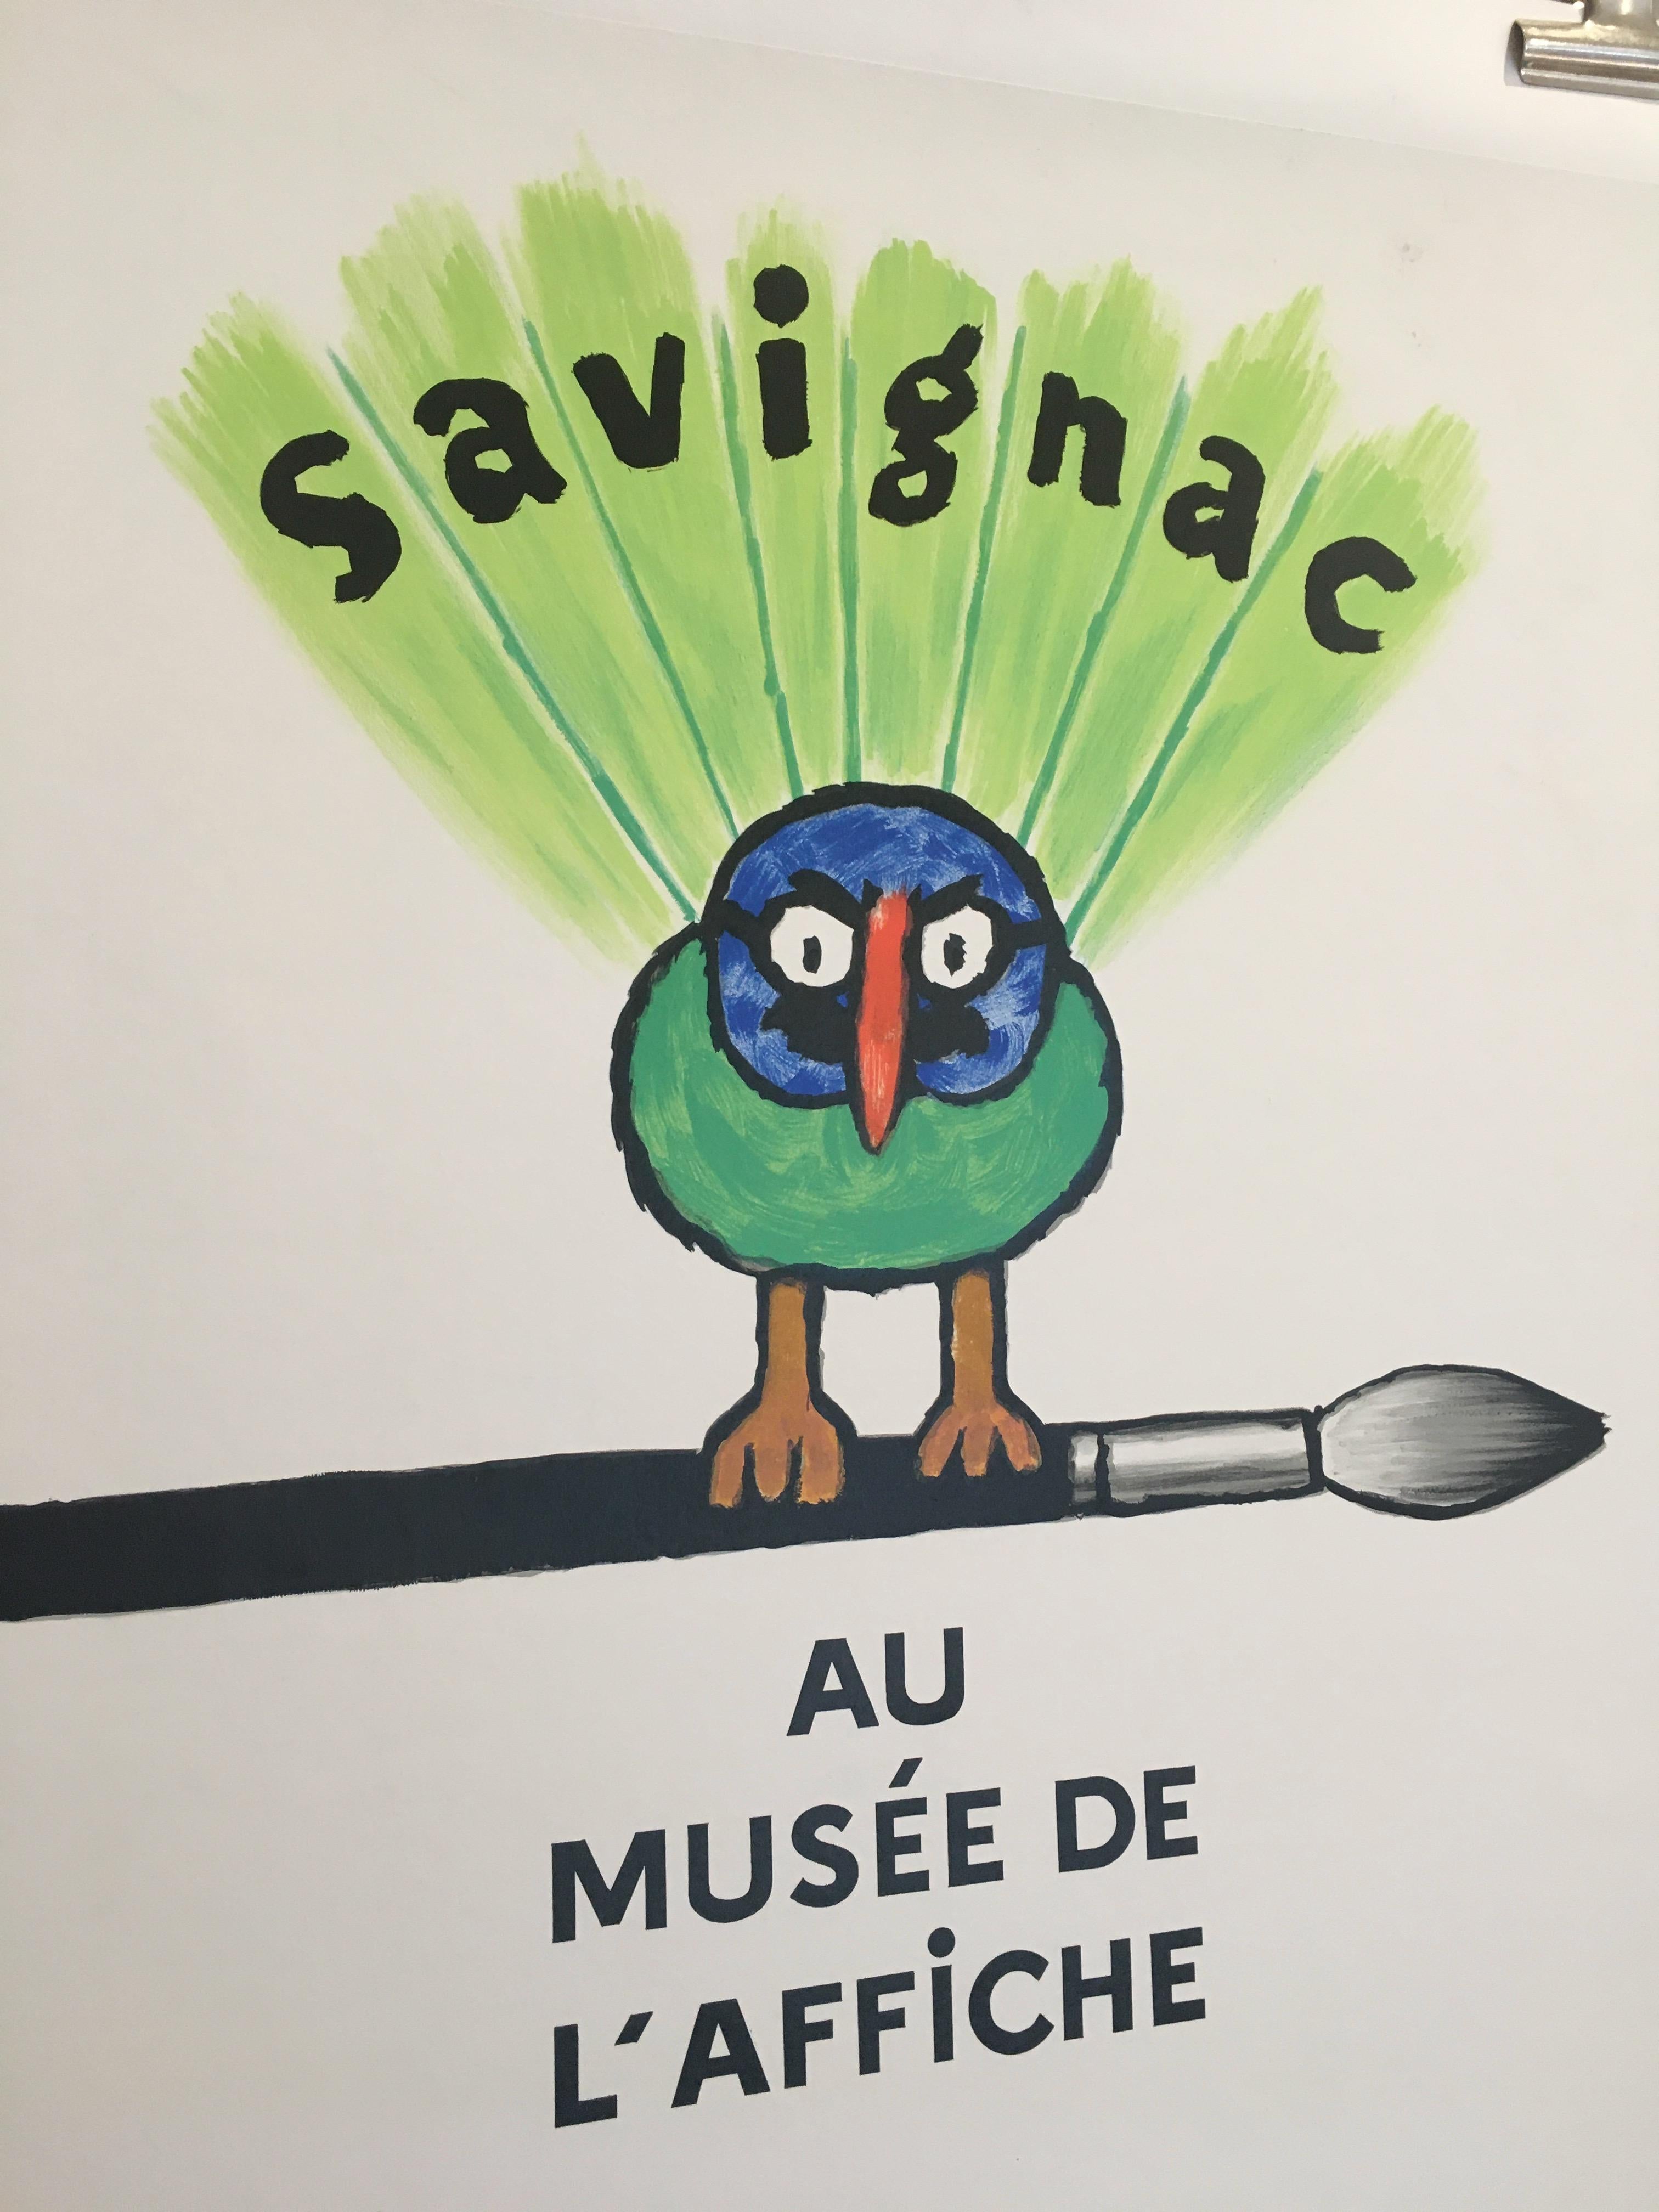 Savignac Bird 'Au Musee De L’Affich' original vintage French exhibition poster

